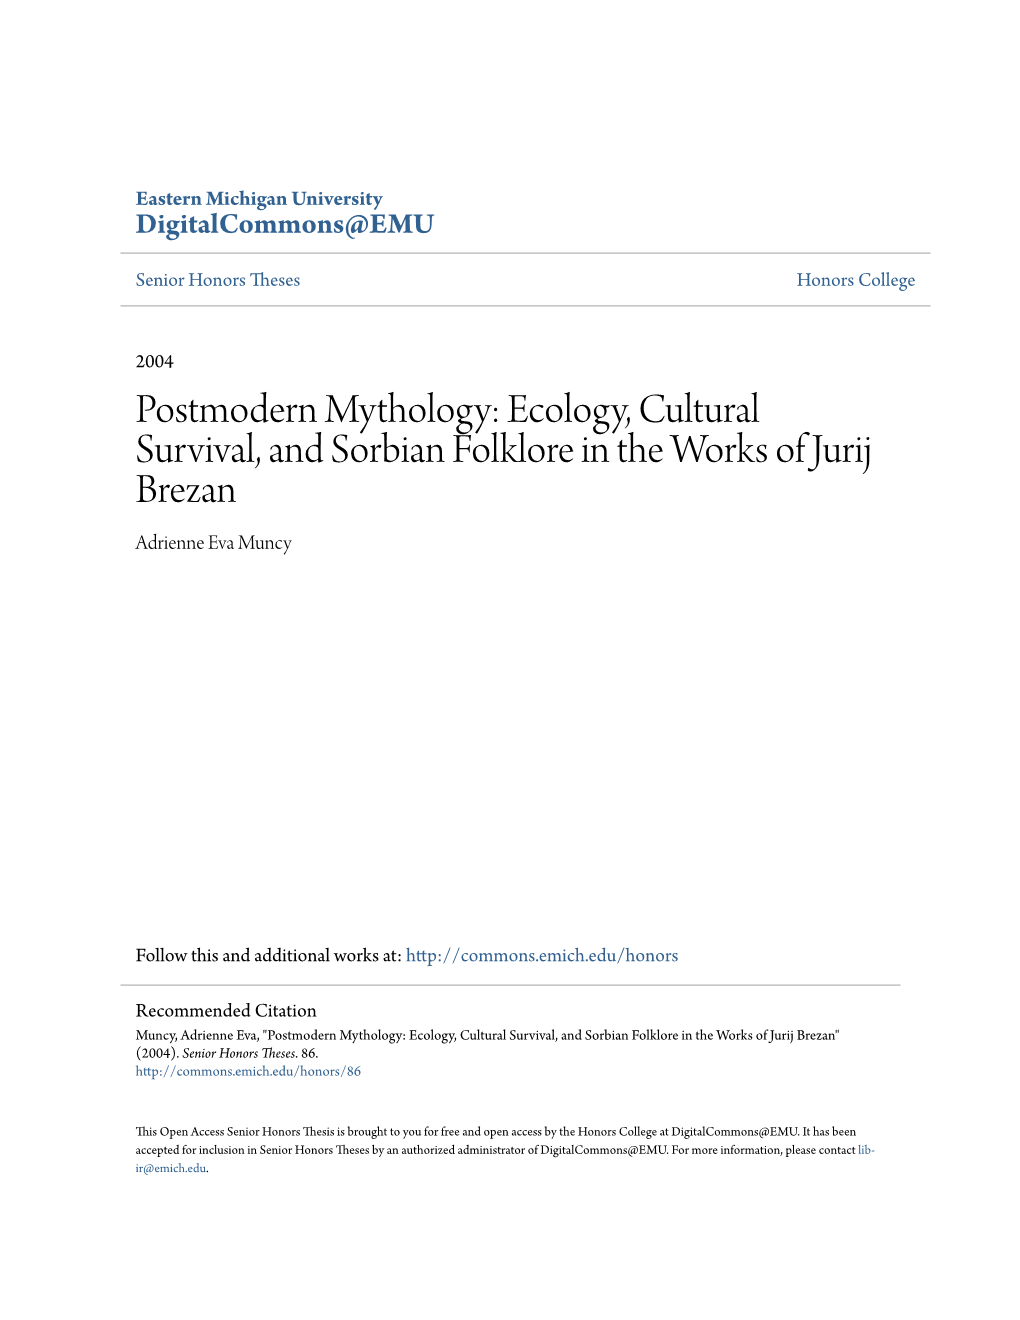 Postmodern Mythology: Ecology, Cultural Survival, and Sorbian Folklore in the Works of Jurij Brezan Adrienne Eva Muncy